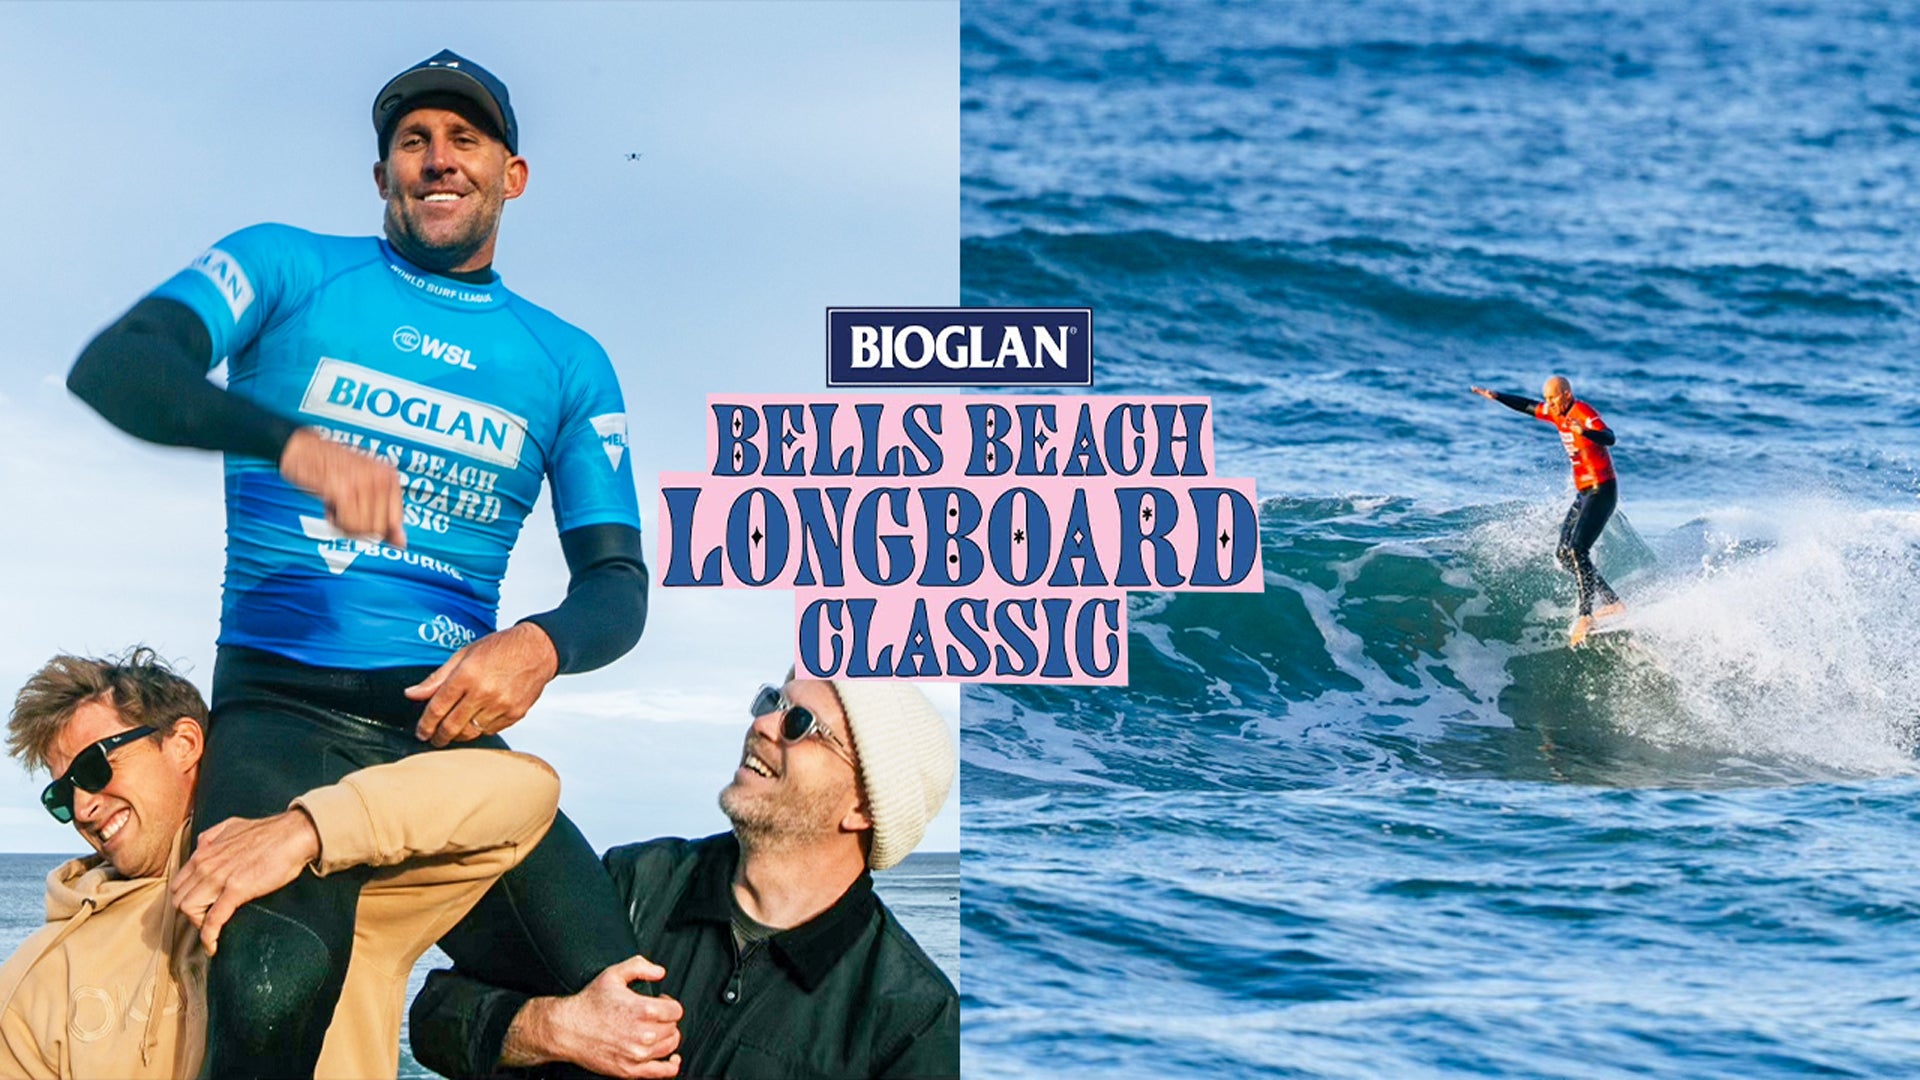 Taylor Jensen Wins WSL Bioglan Bells Beach Longboard Classic